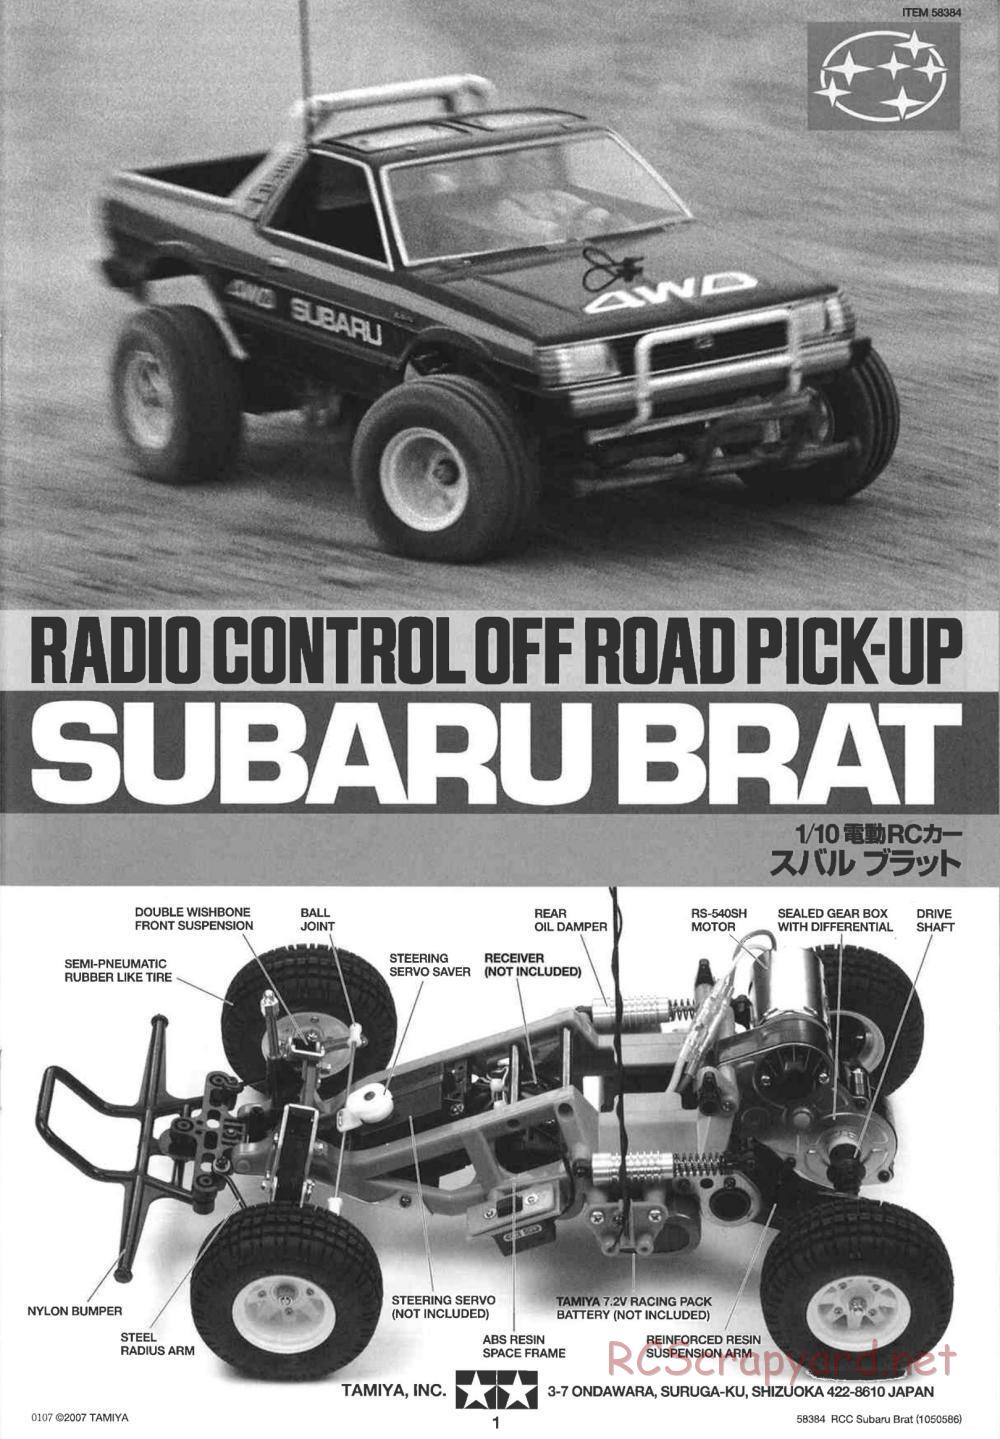 Tamiya - Subaru Brat 2007 - ORV Chassis - Manual - Page 1